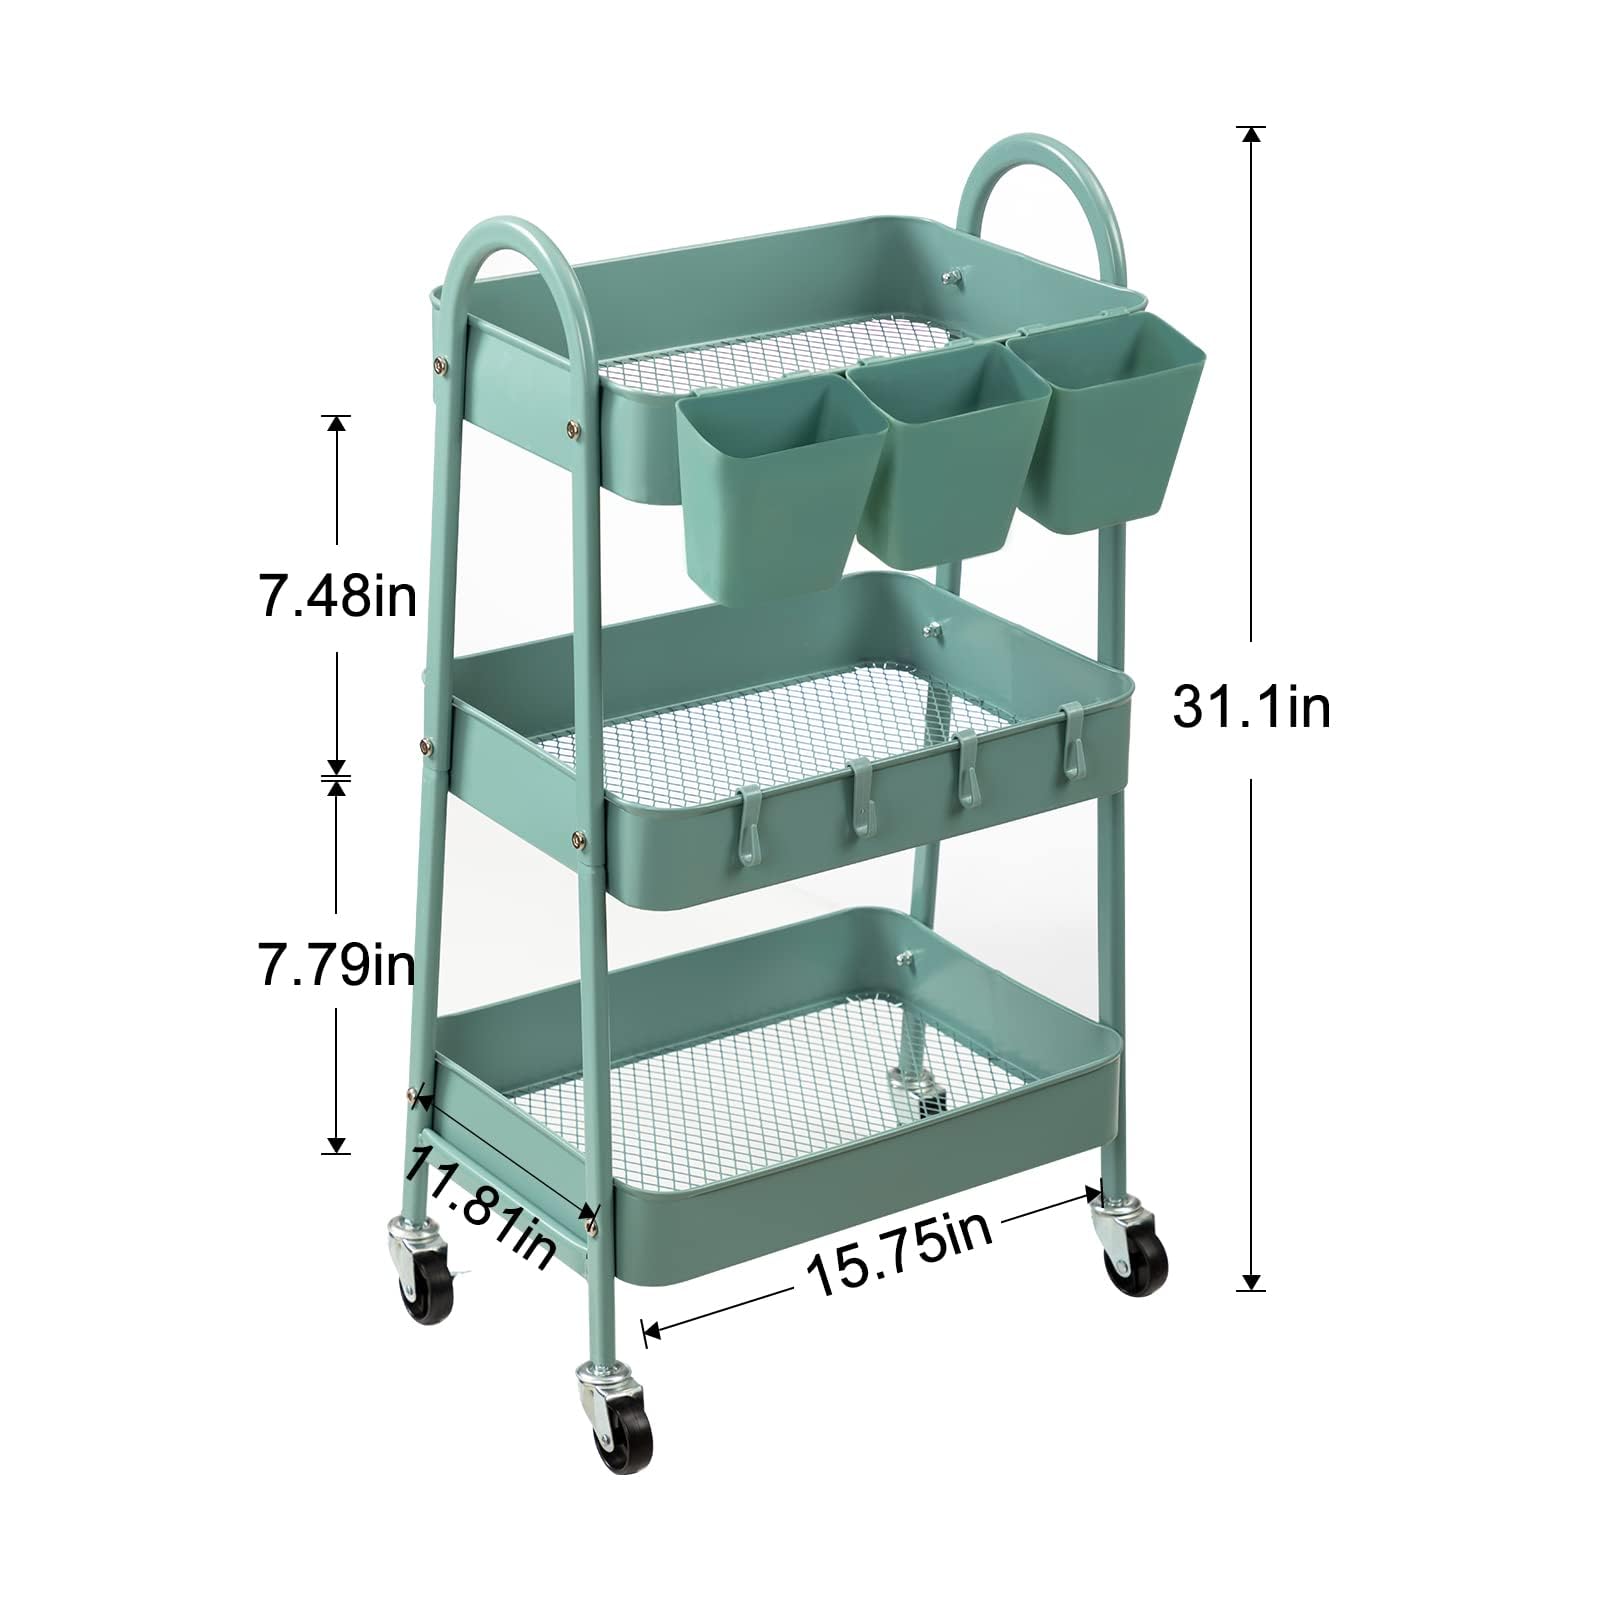 danpinera 3-Tier Rolling Cart, Metal Rolling Storage Cart with Lockable Wheels & Hanging Cups & Hooks, Mobile Trolley Cart for Kitchen, Bathroom, Office, Workshop, Green